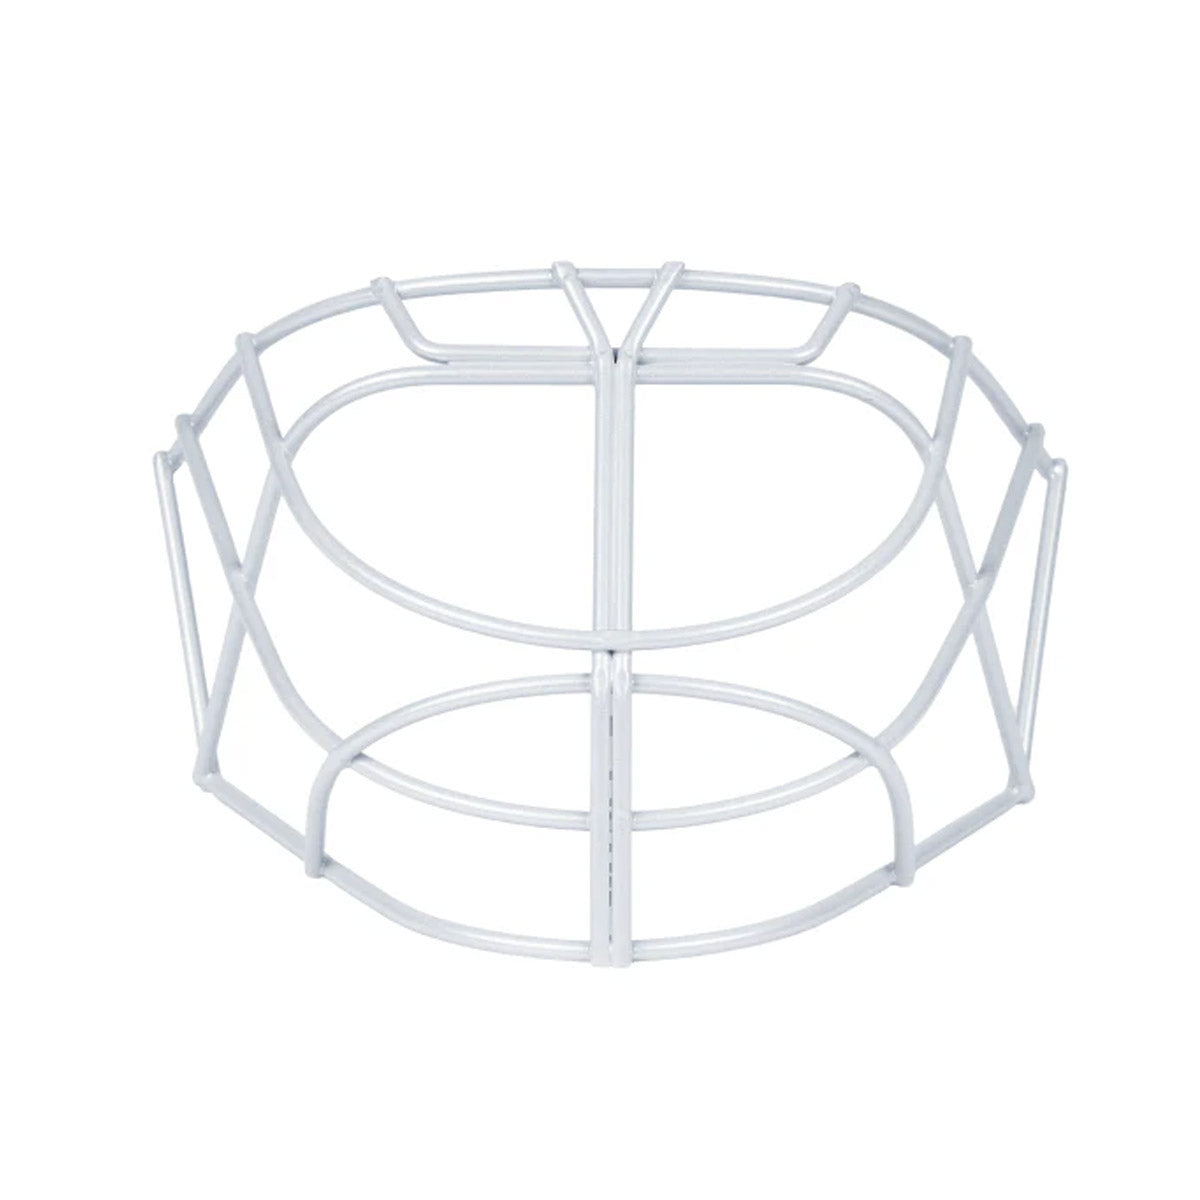 Helmet Grill/Cage - PE/FG/CK